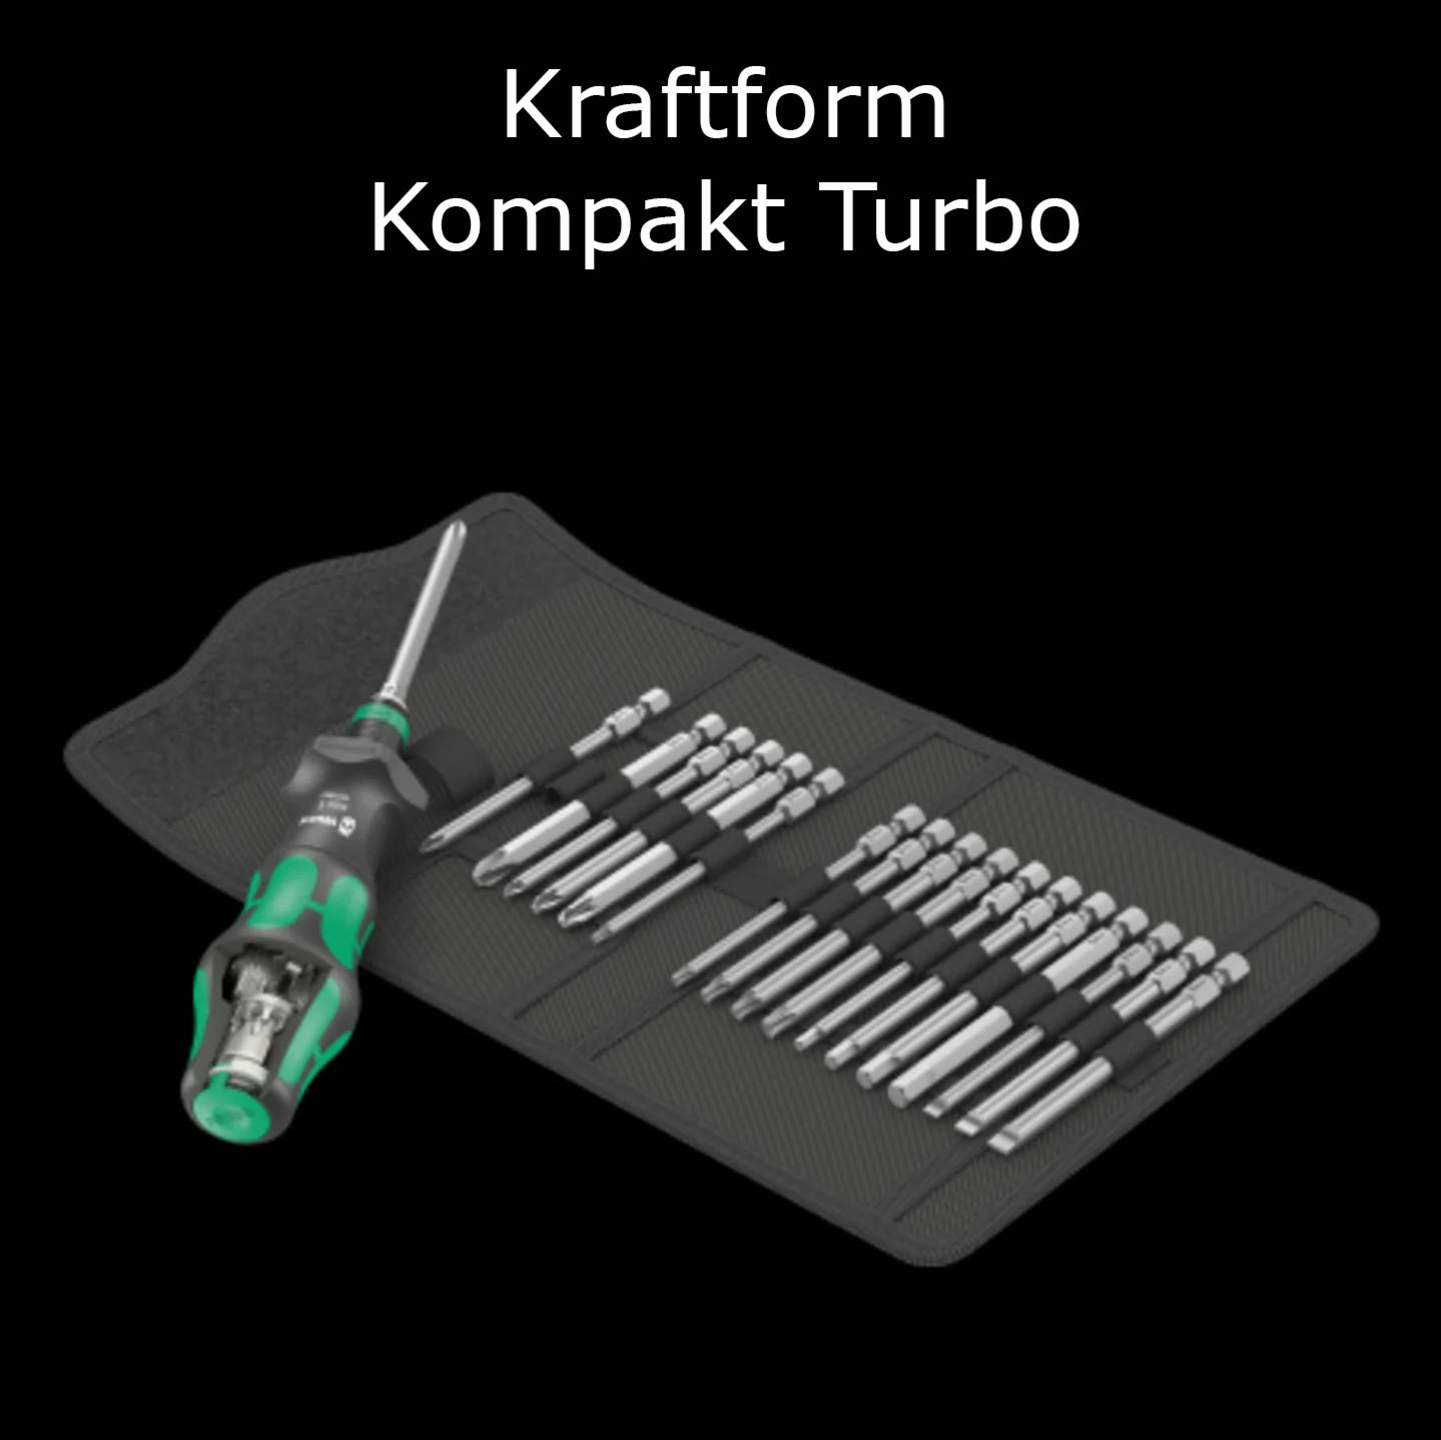 Kraftform Kompakt Turbo